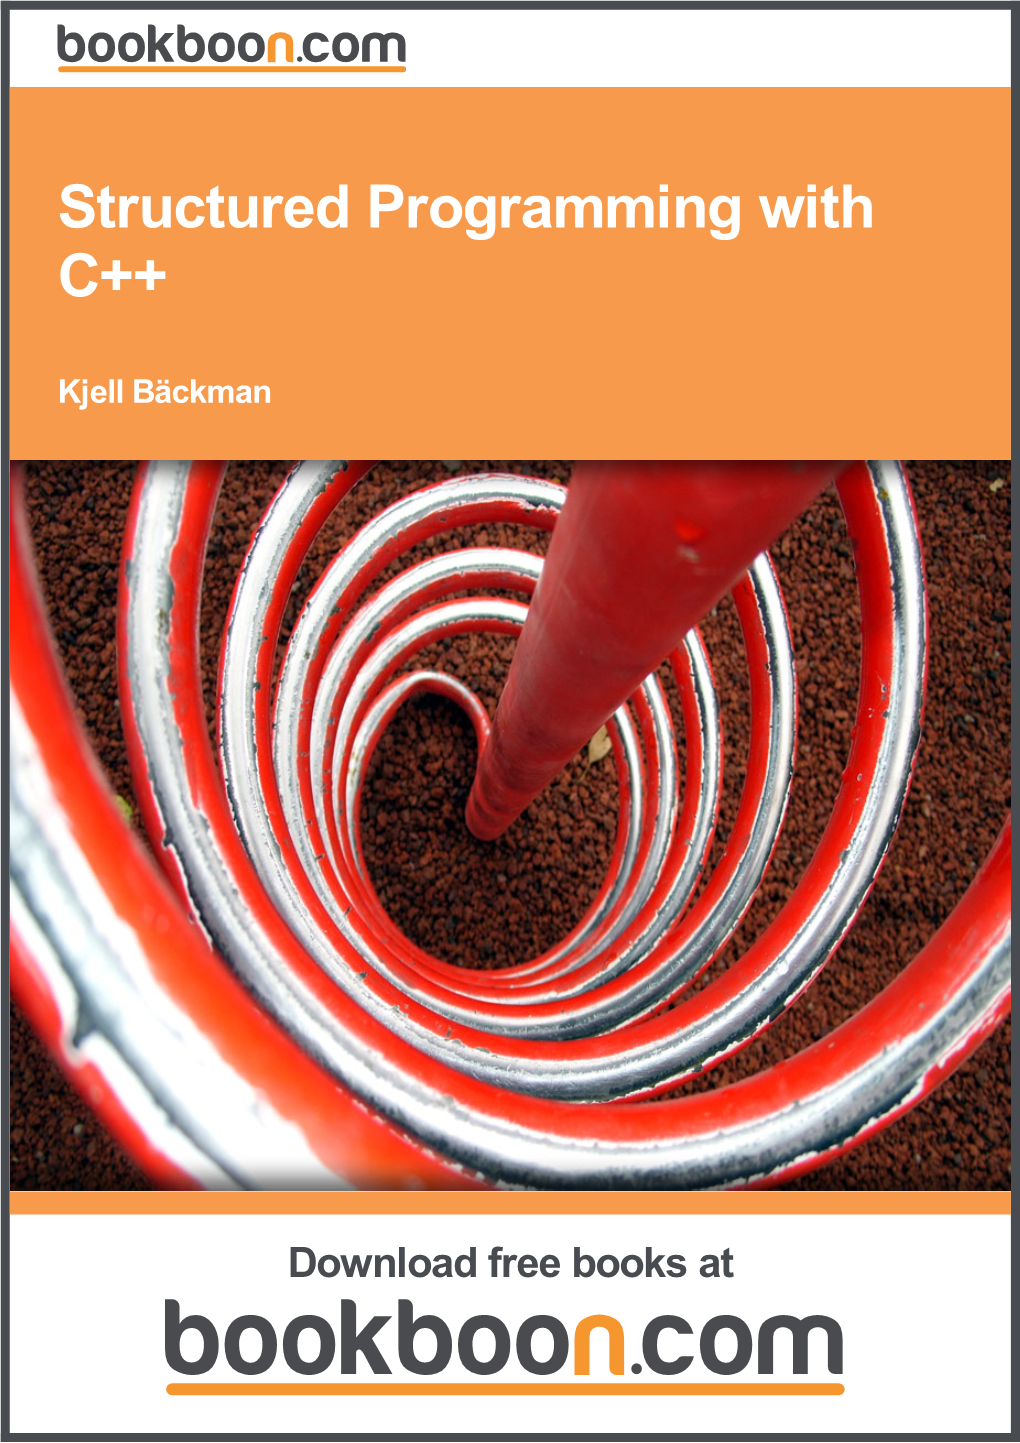 Structured Programming with C++ (Kjell Bäckman)